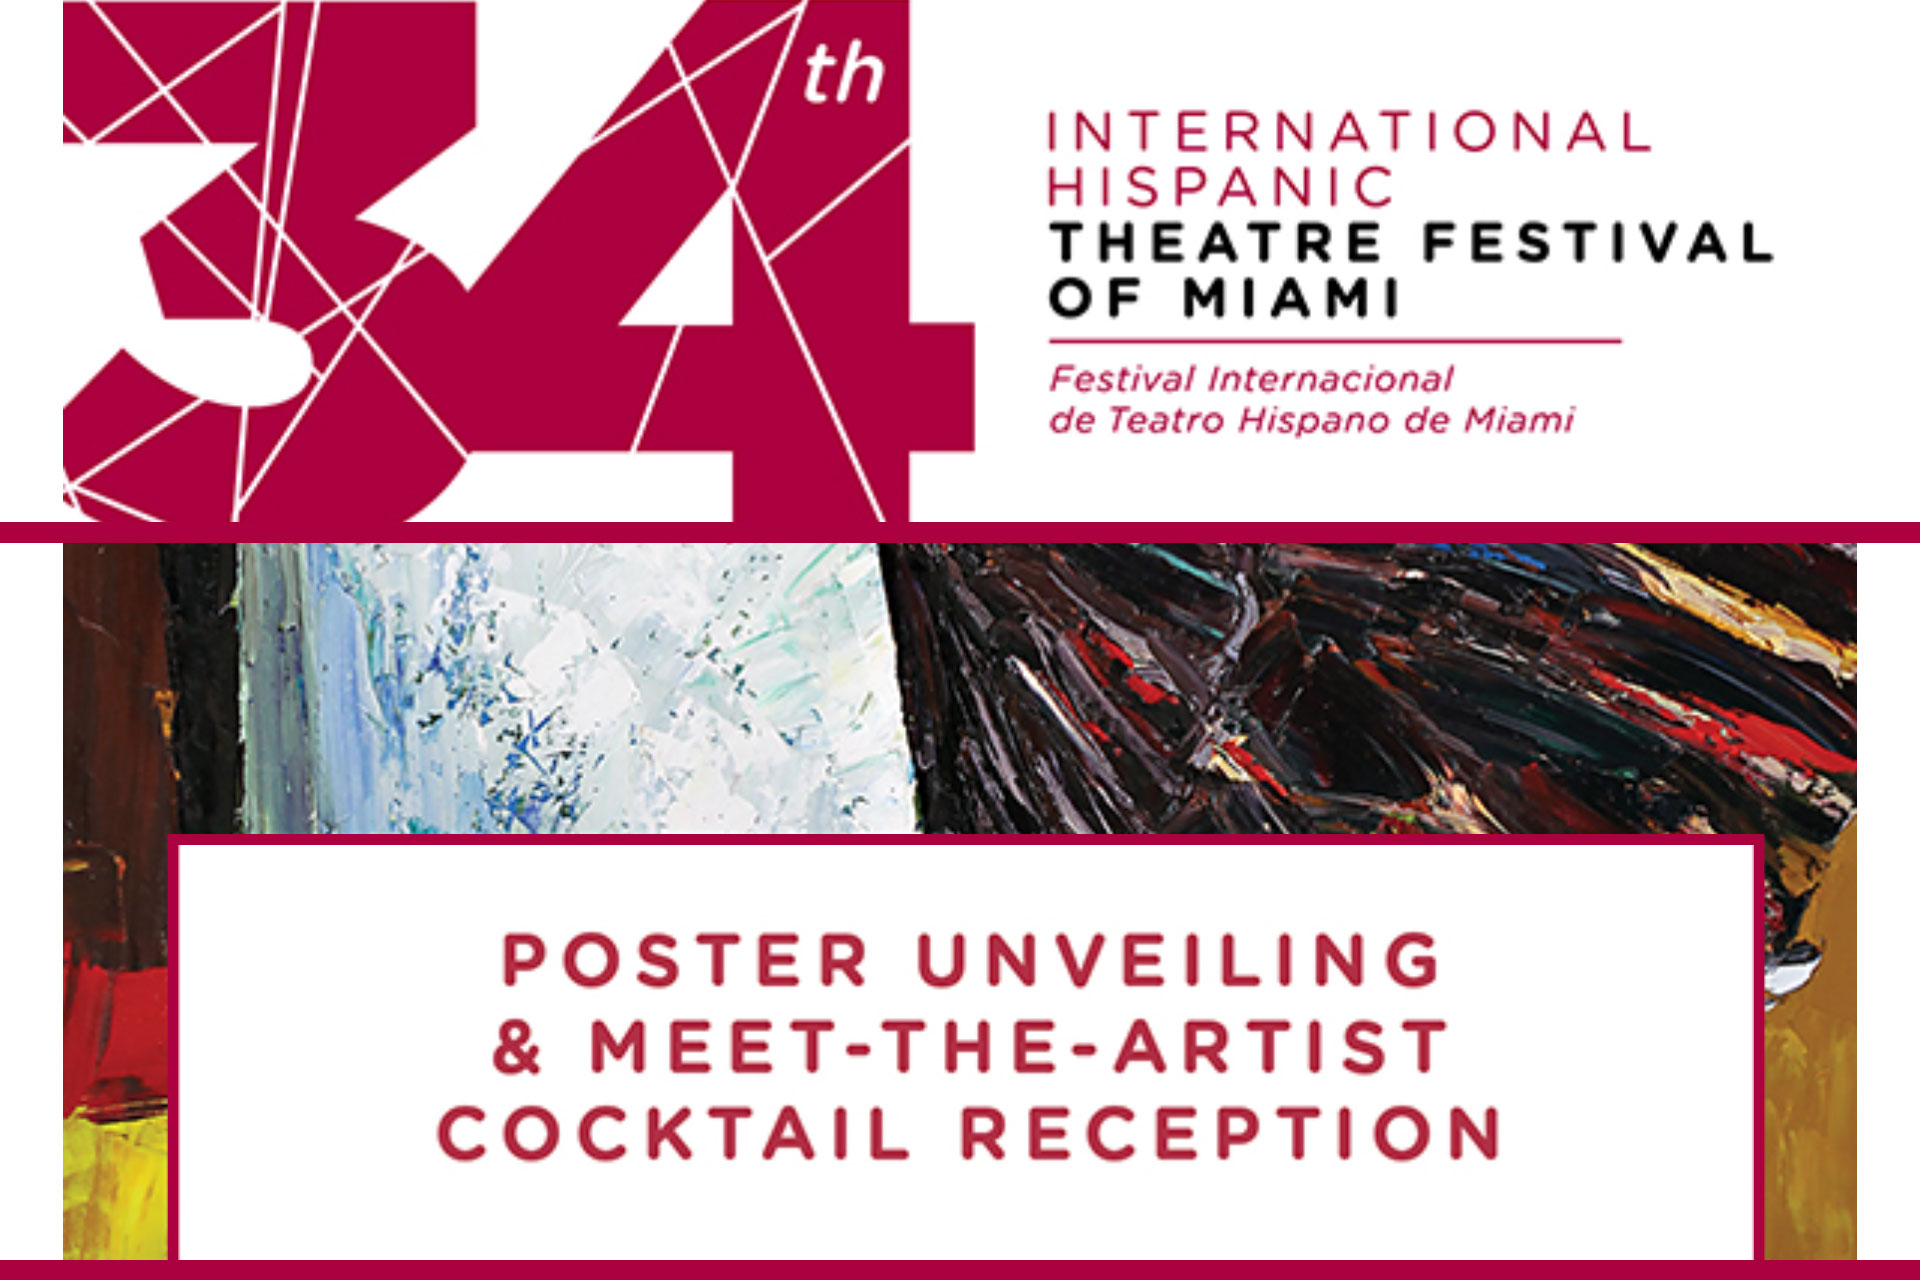 International Hispanic Theatre Festival of Miami